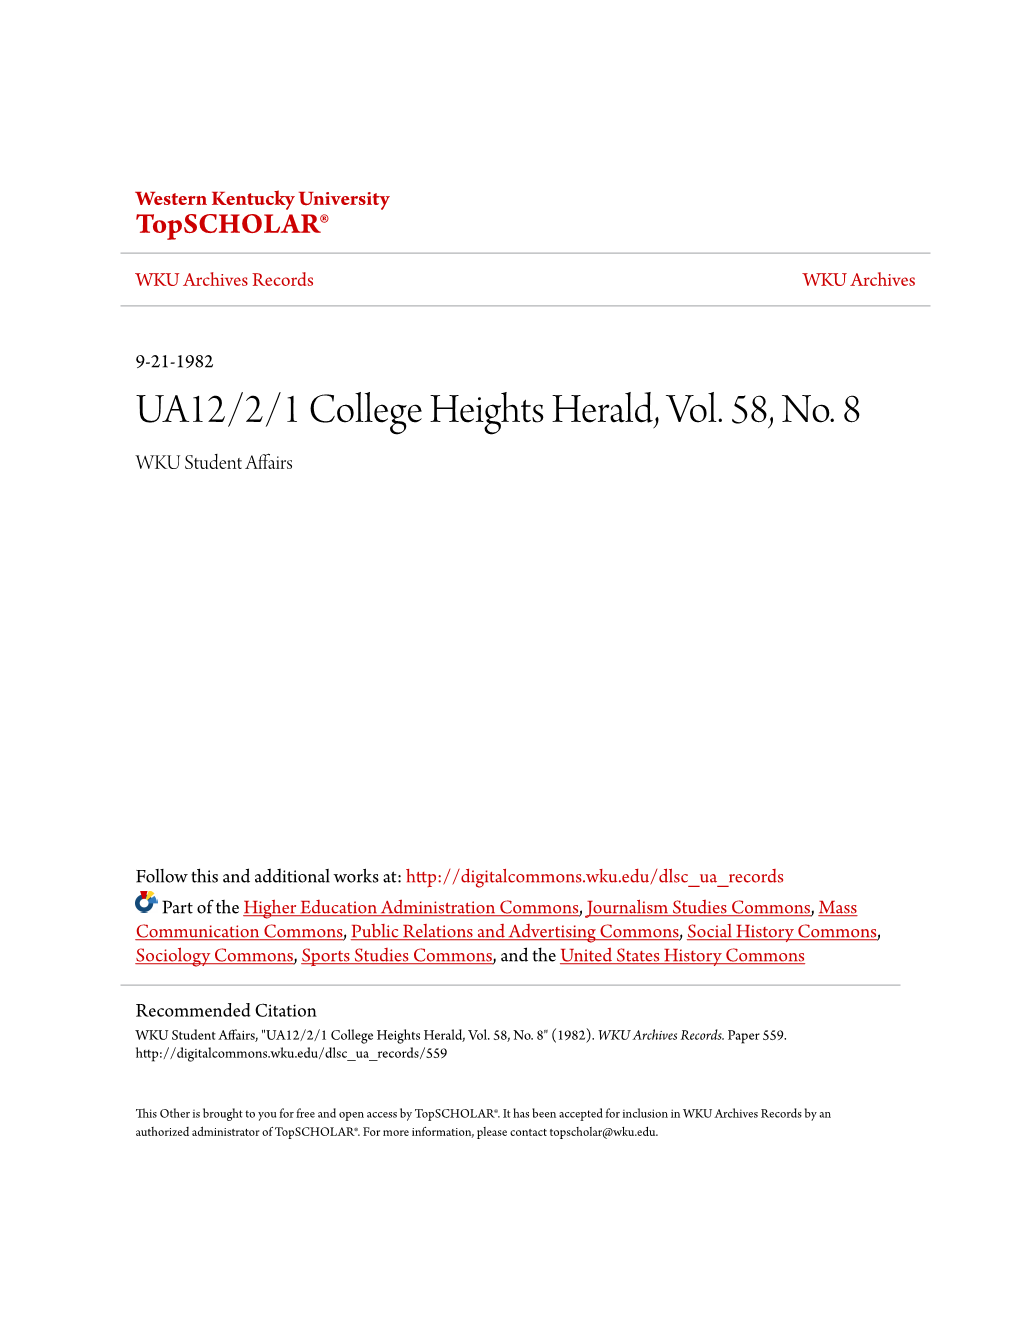 UA12/2/1 College Heights Herald, Vol. 58, No. 8 WKU Student Affairs